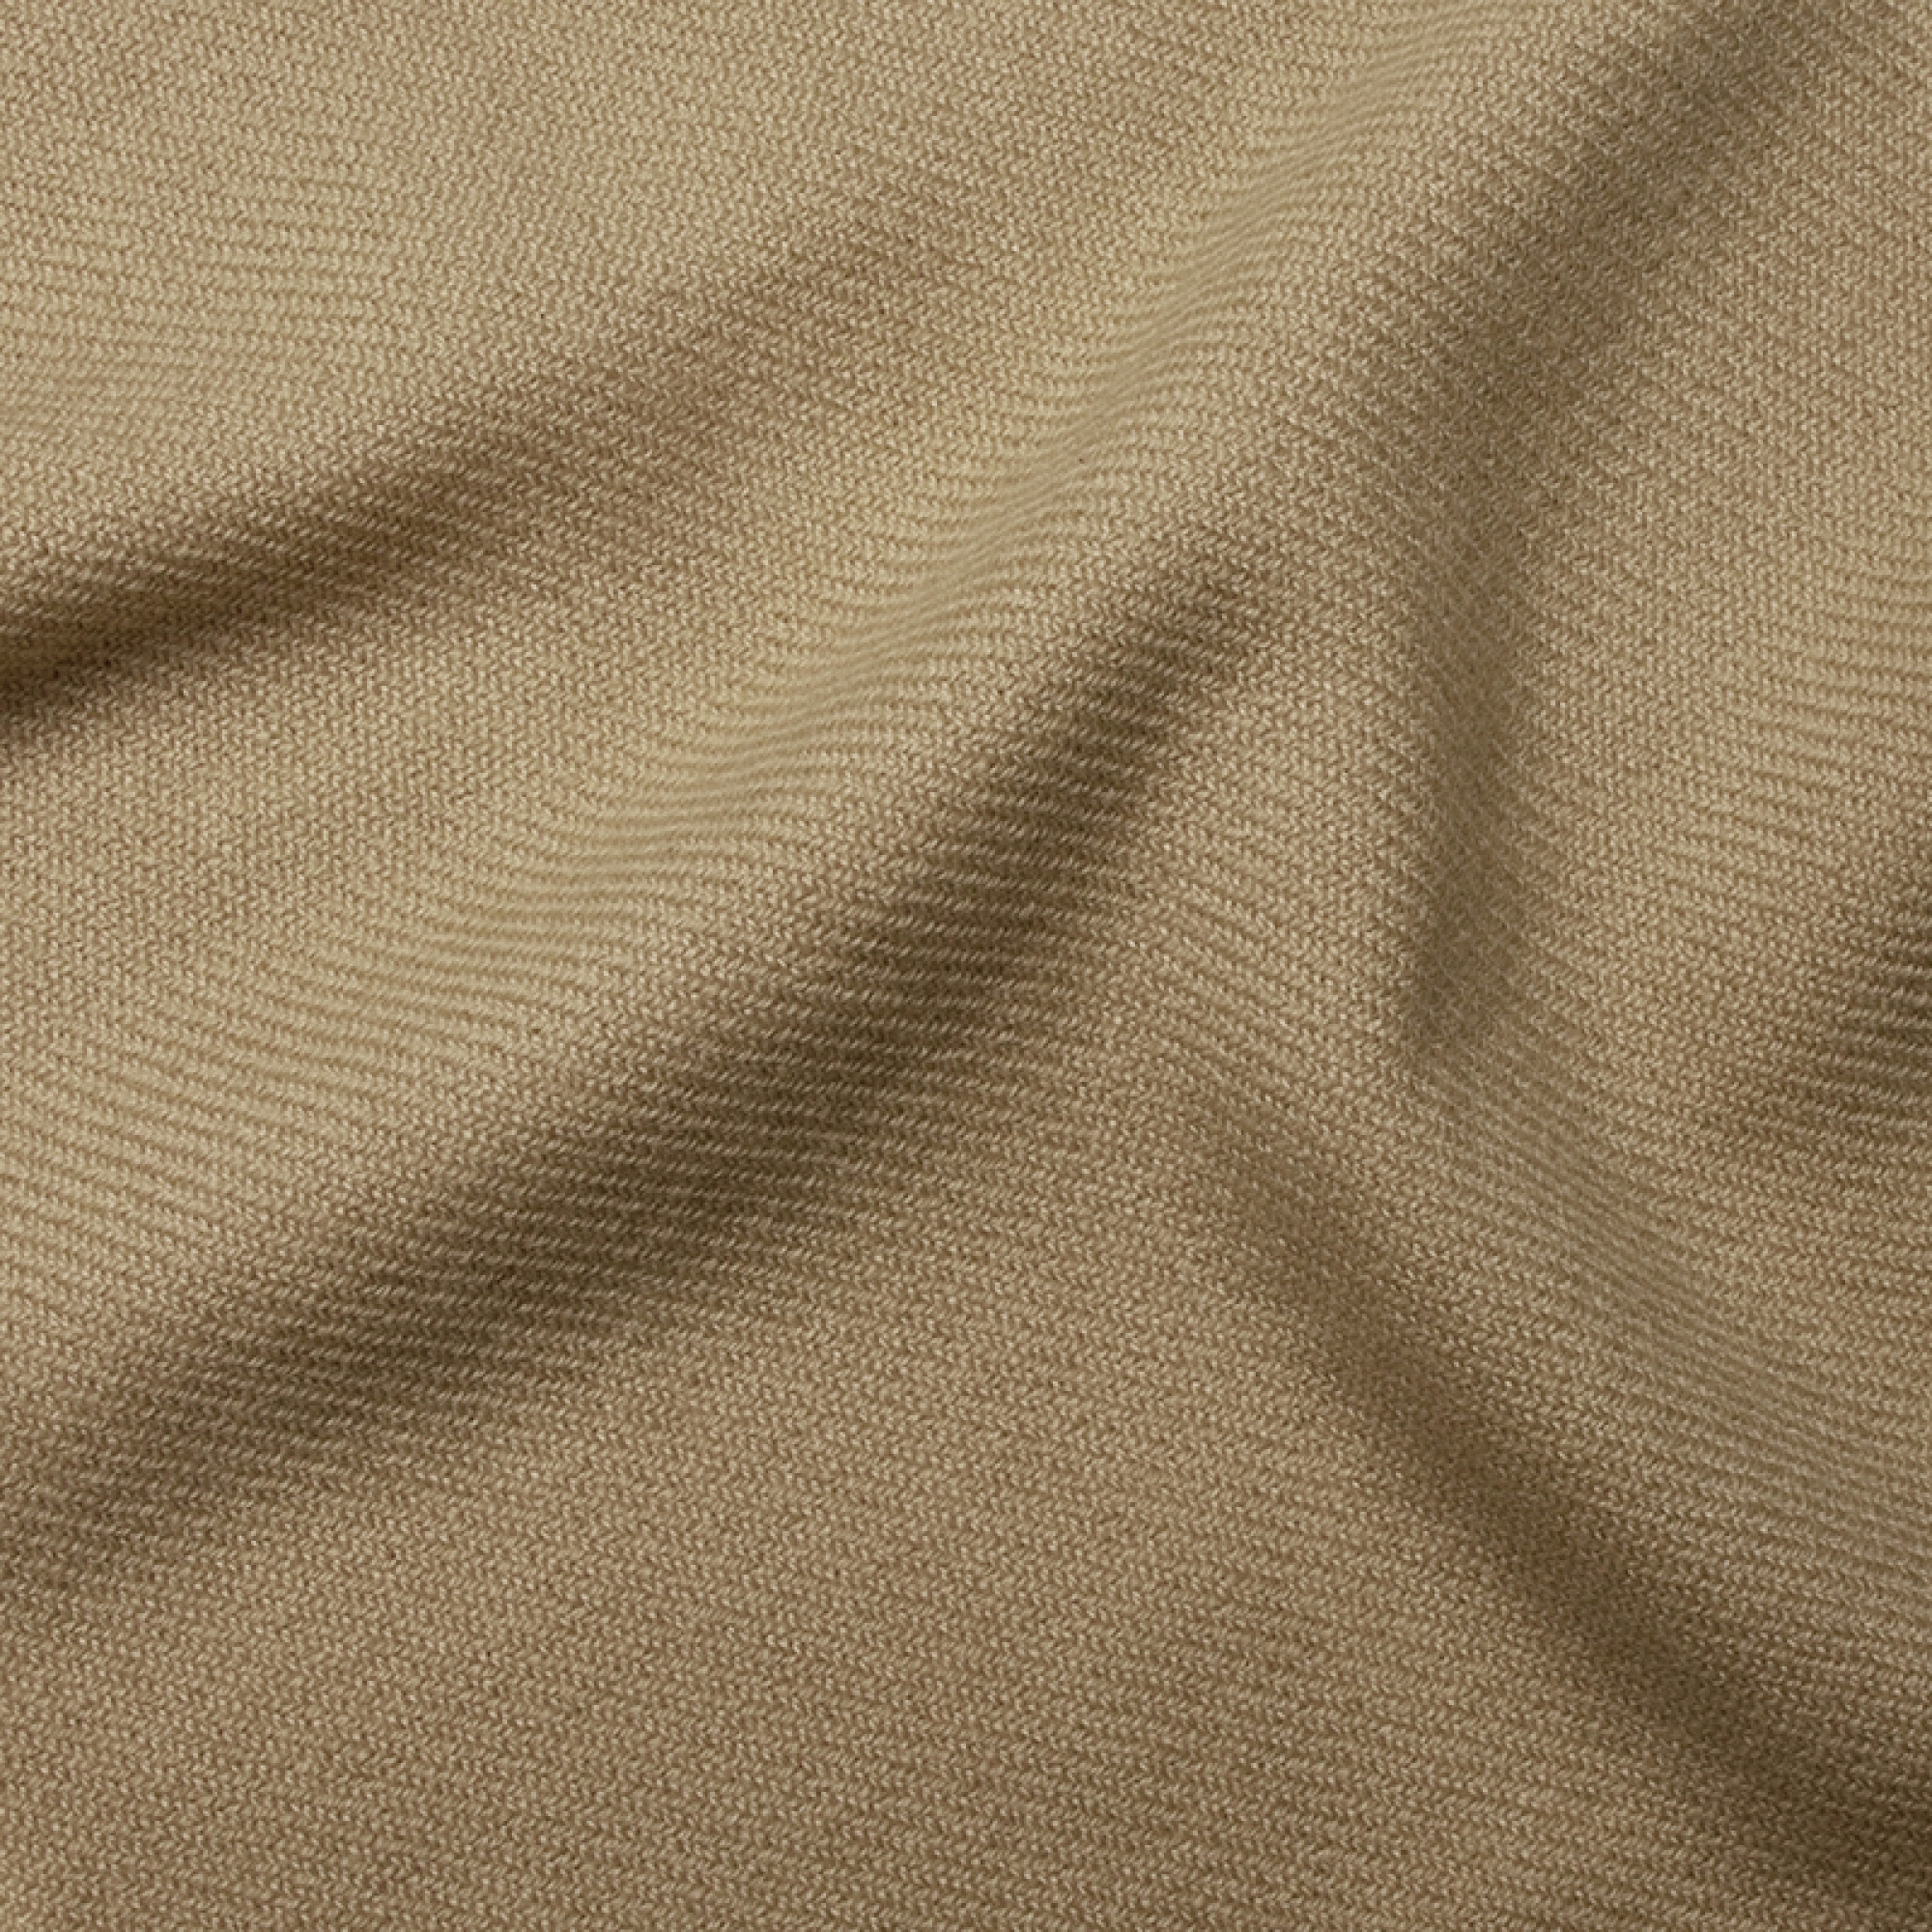 Cashmere accessori cocooning toodoo plain l 220 x 220 beige 220x220cm